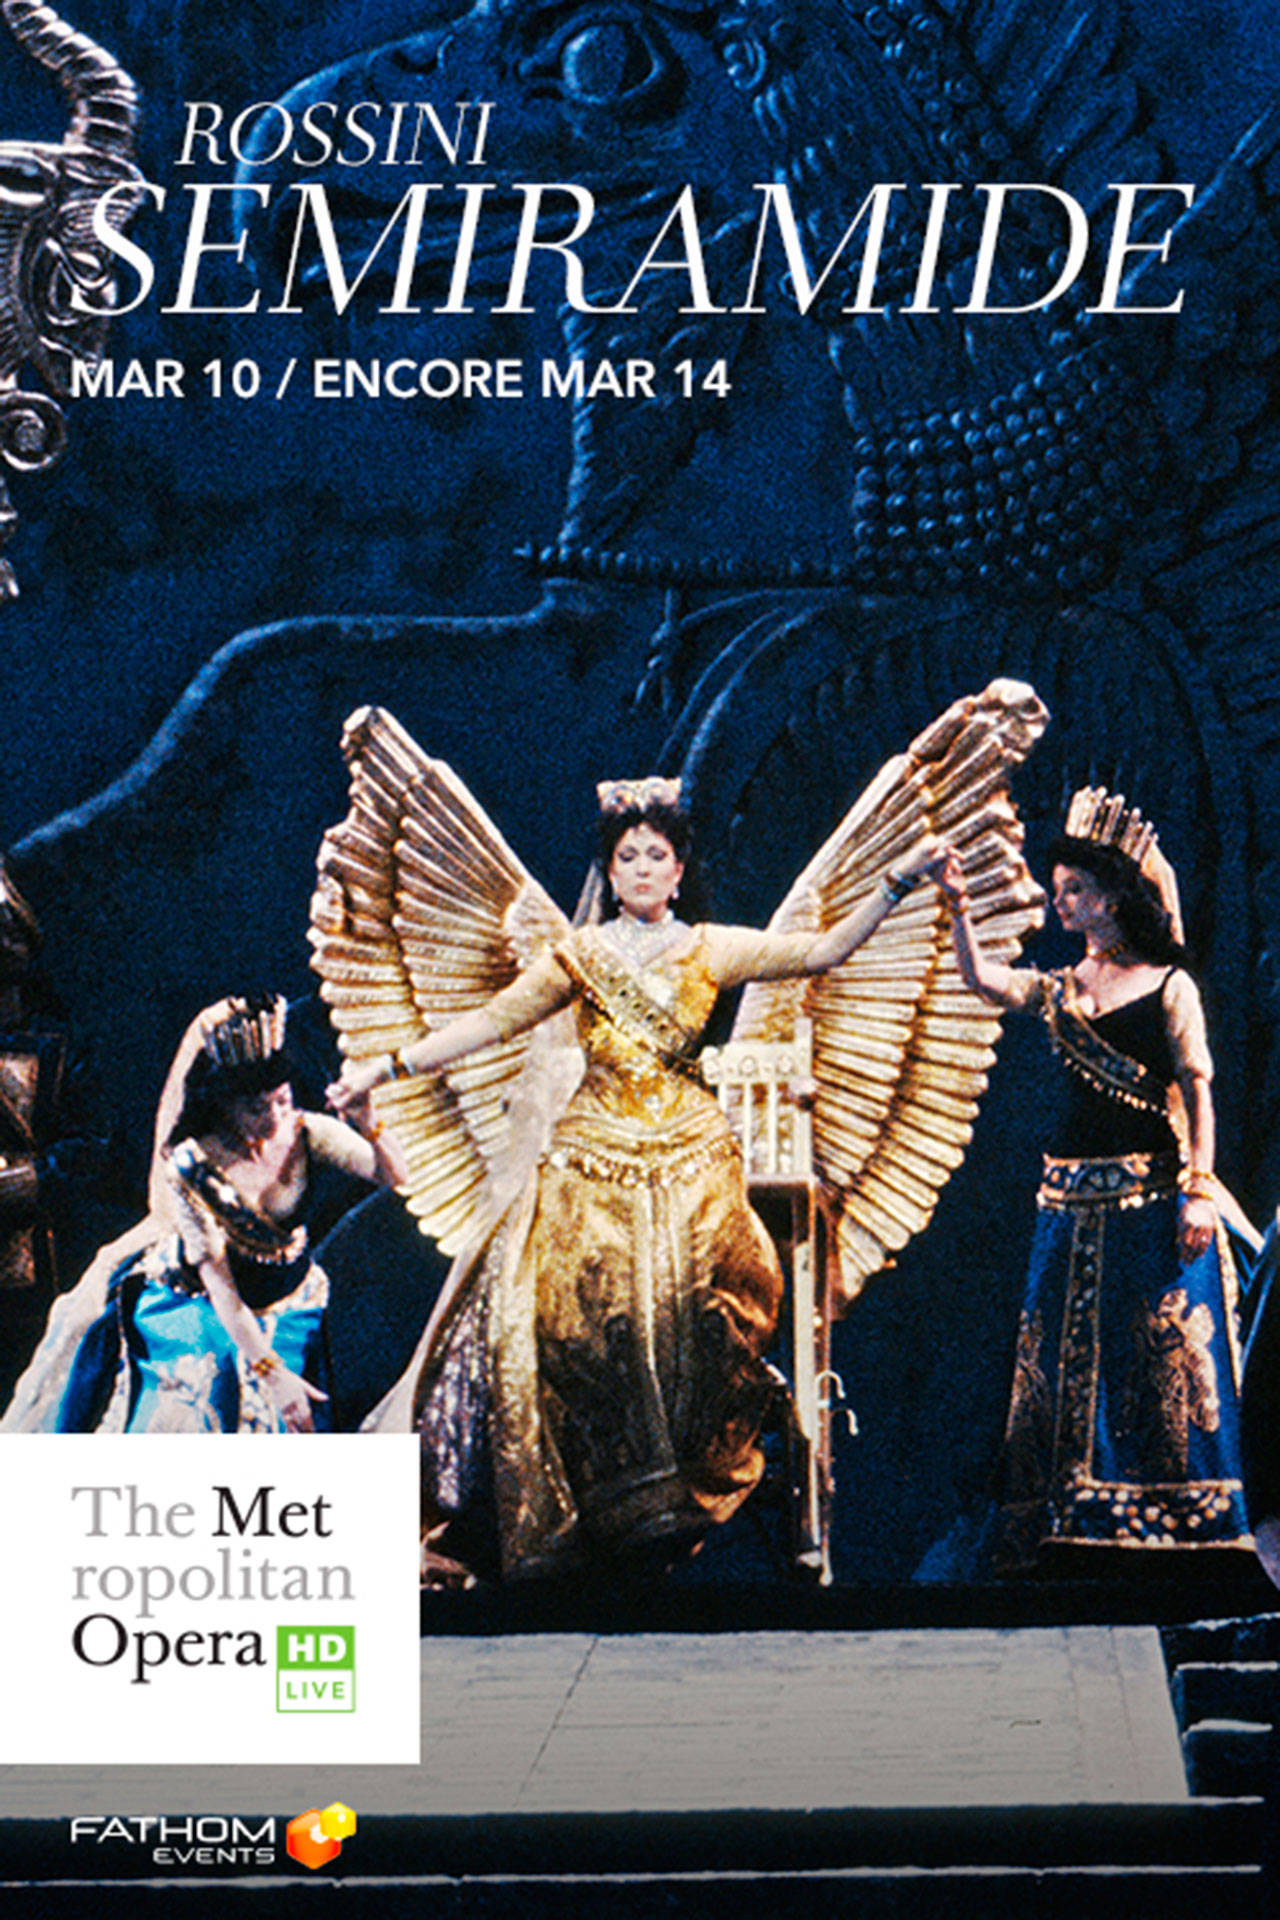 Image courtesy of Bainbridge Cinemas | The Metropolitan Opera’s “Semiramide” will play at Bainbridge Cinemas at 9:55 a.m. Saturday, March 10.